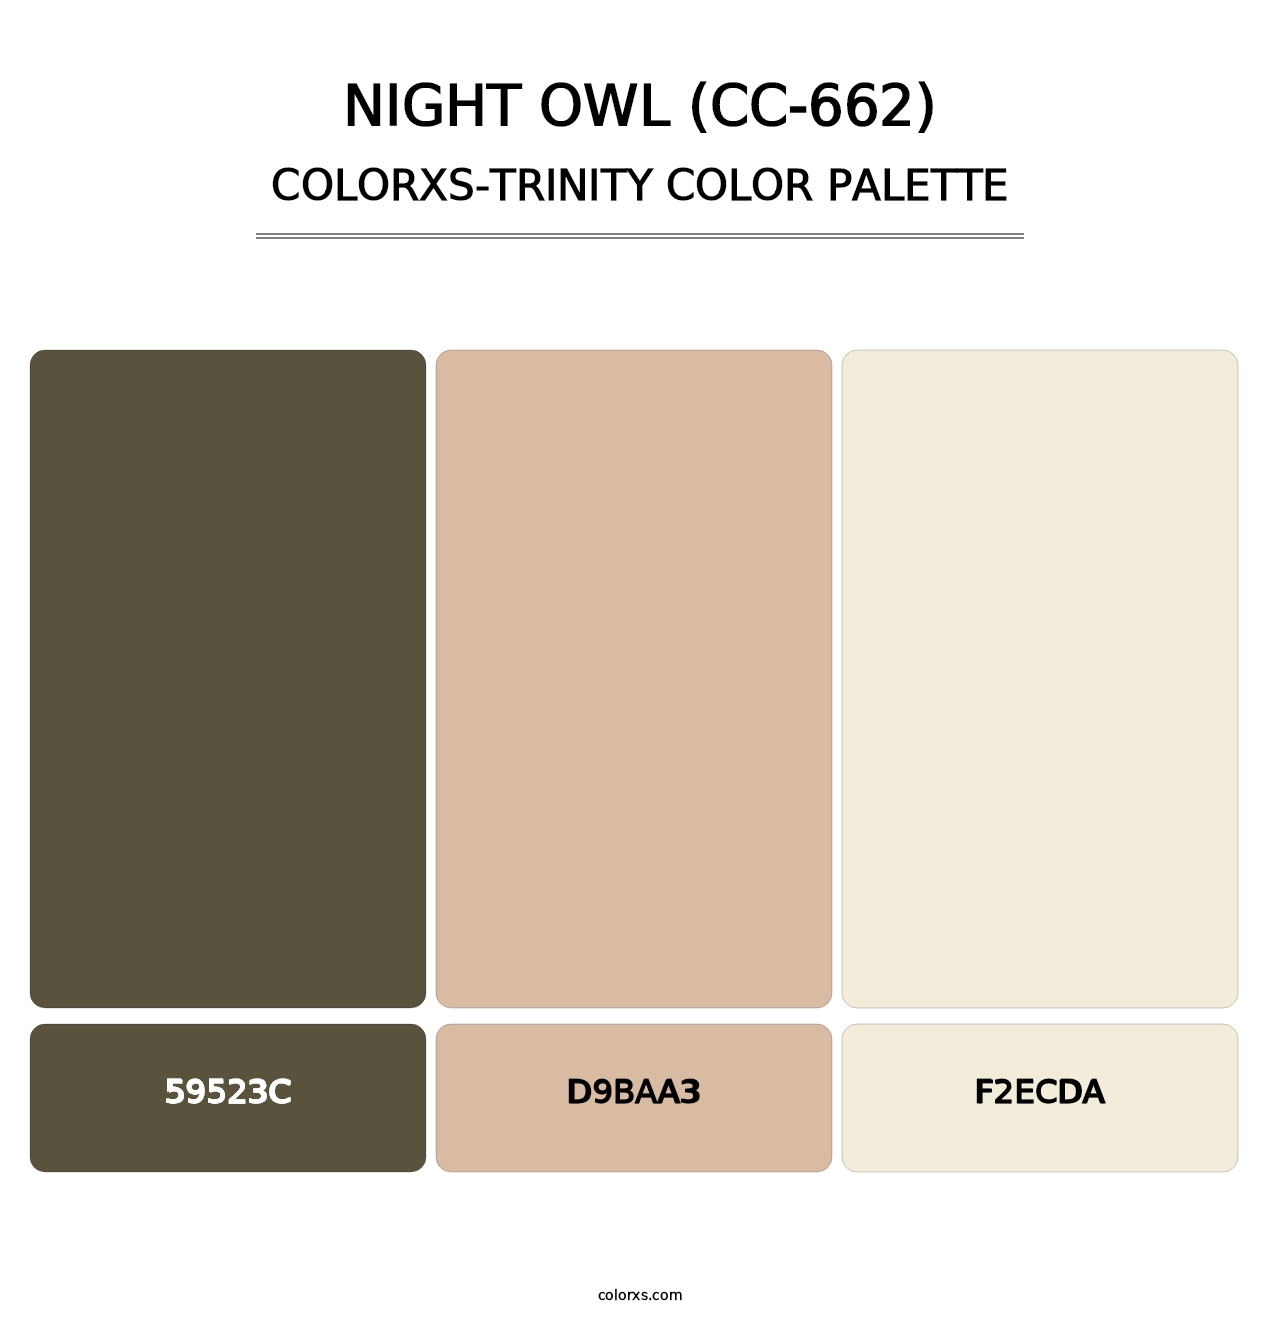 Night Owl (CC-662) - Colorxs Trinity Palette